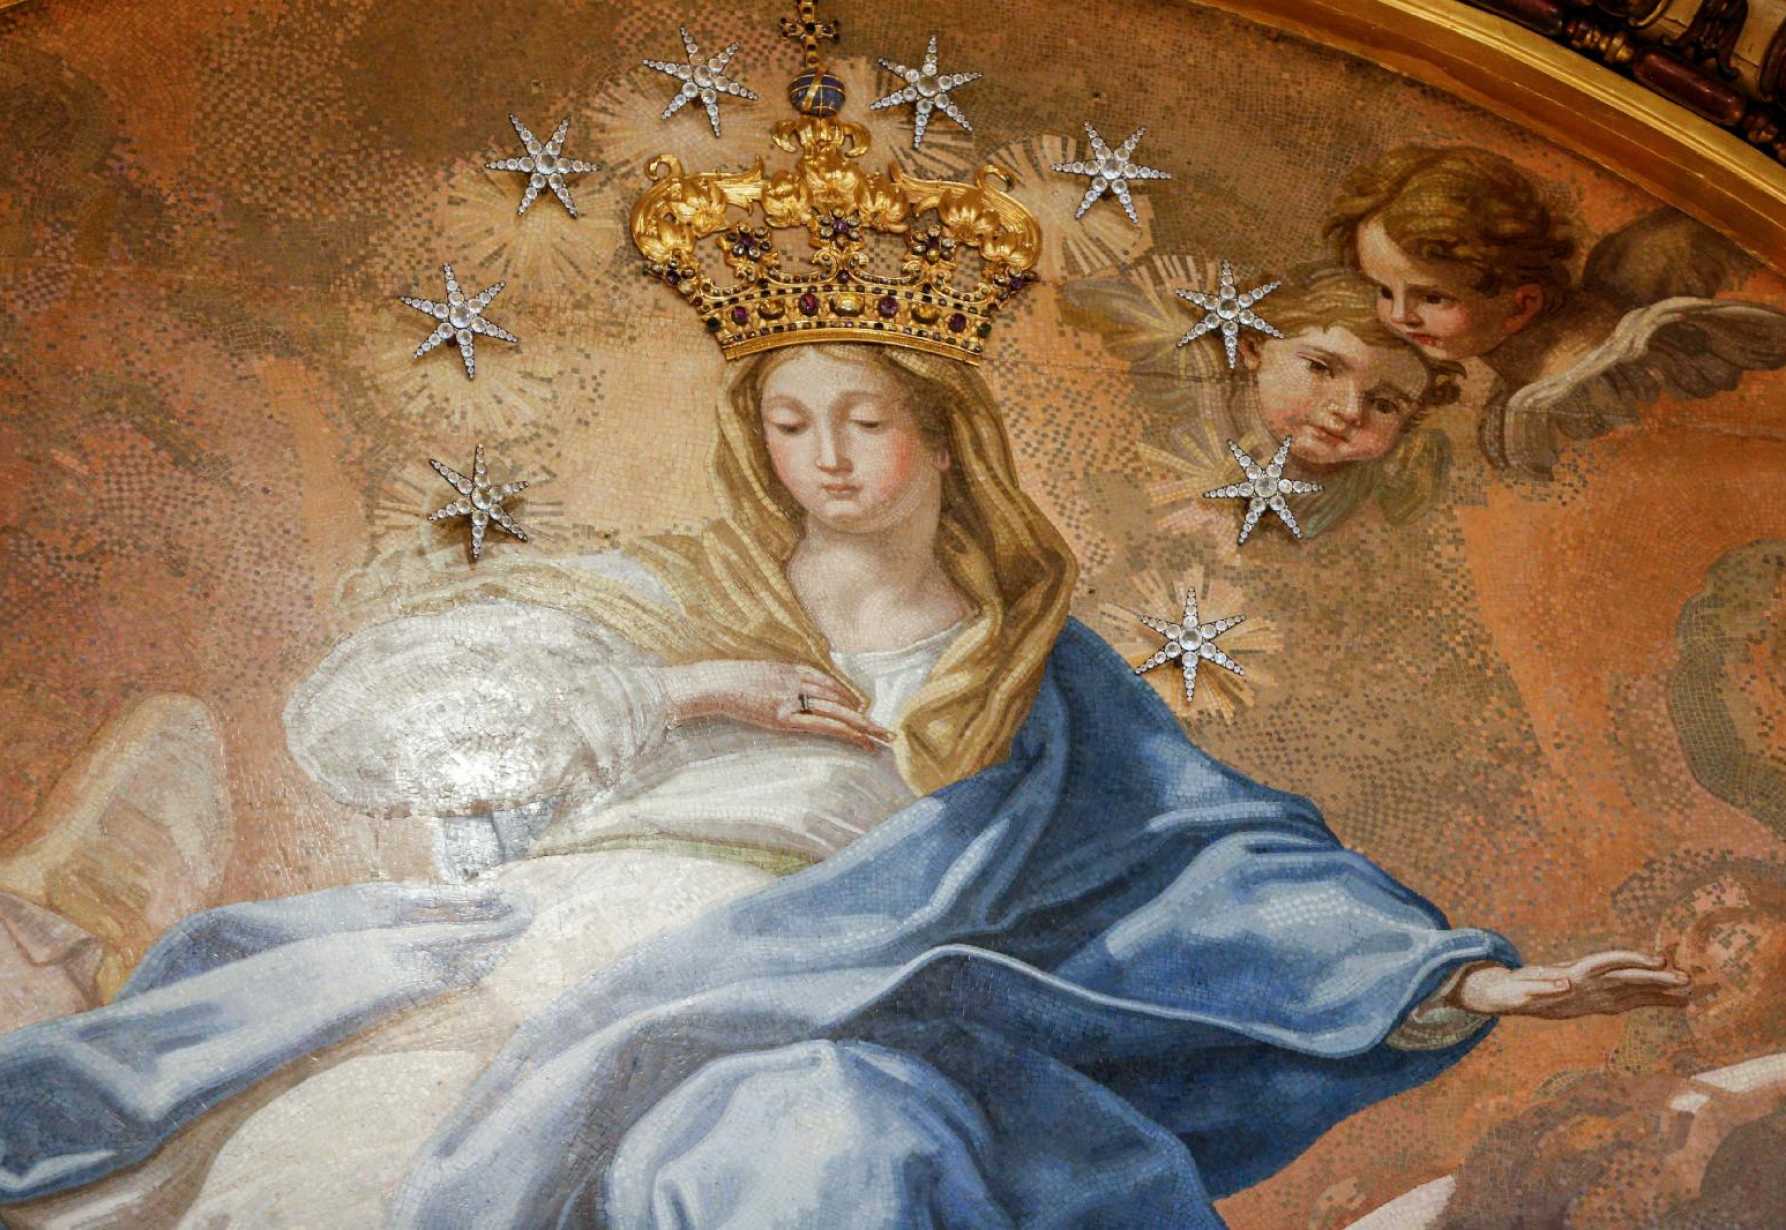 St. Peter's Basilica opens exhibit on Marian coronations